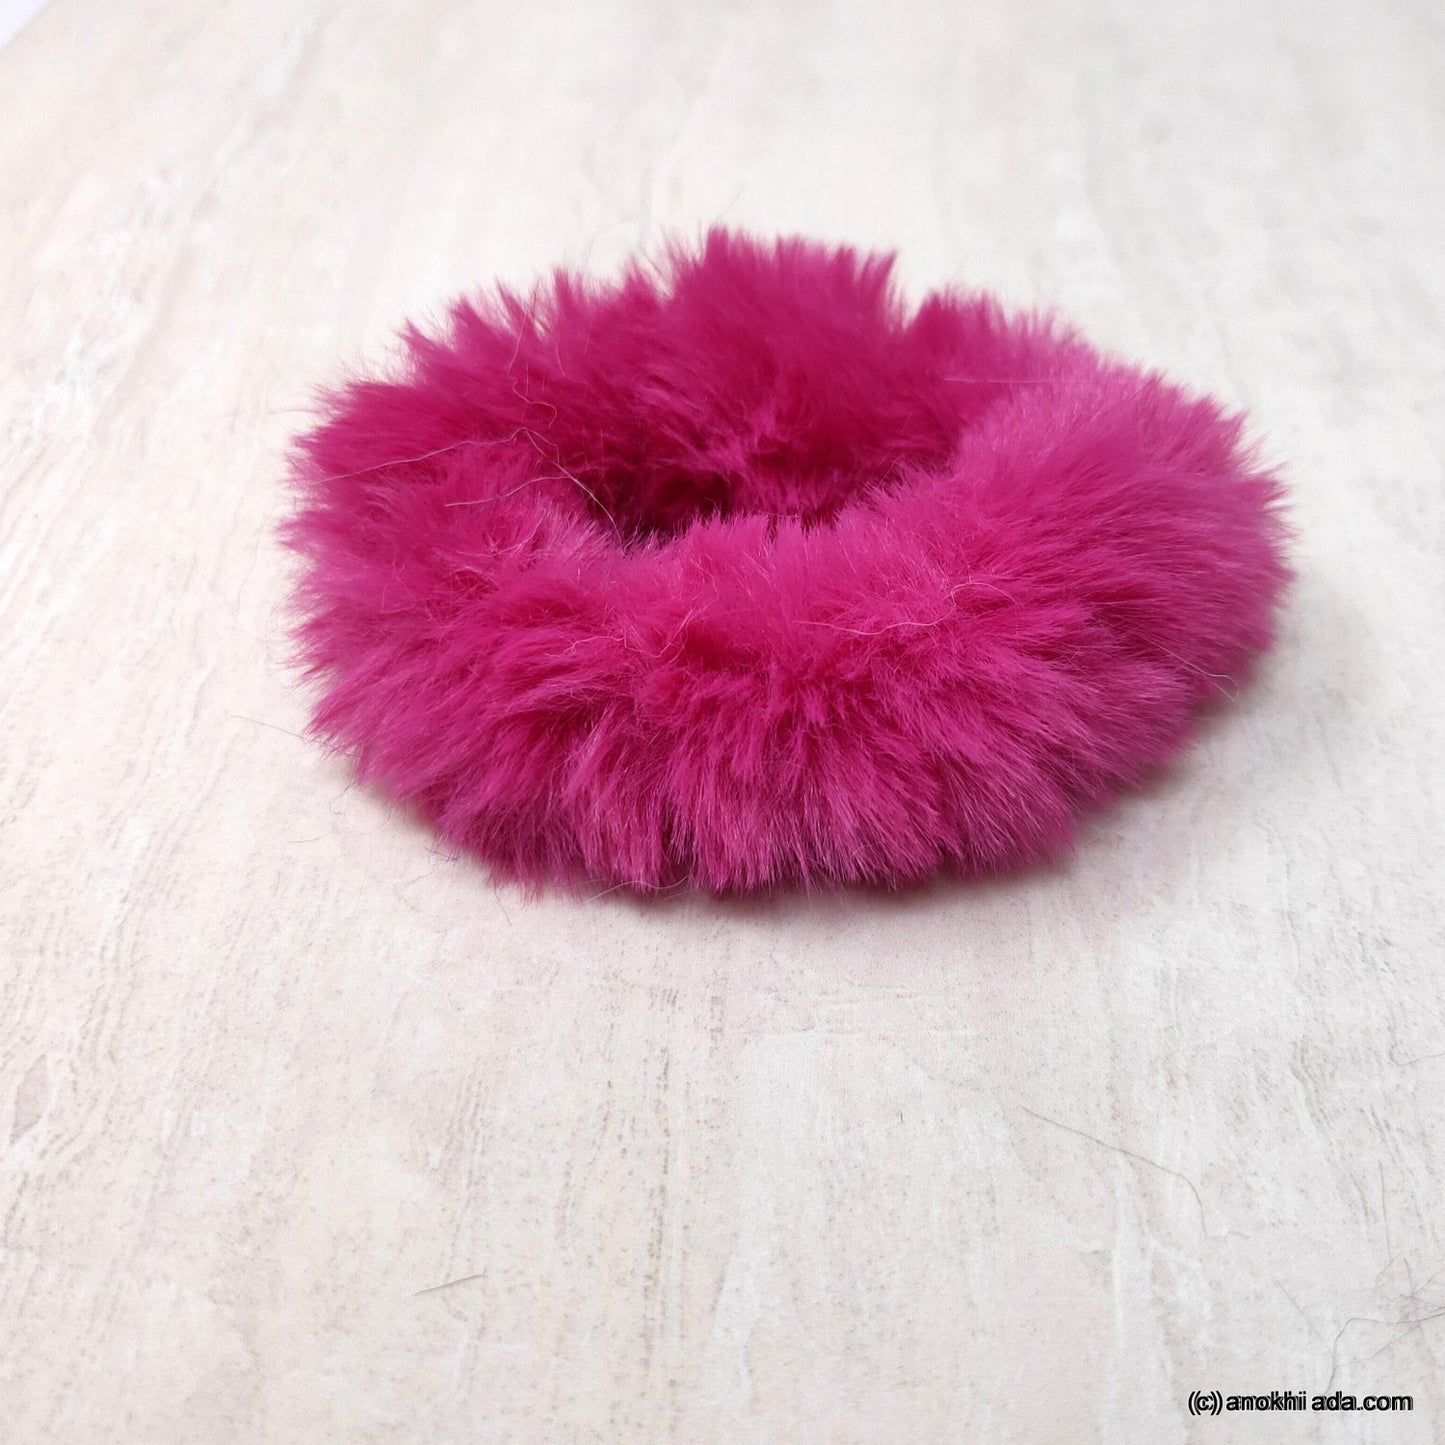 Anokhi Ada Pink Fur Scrunchie for Girls and Women (ZG-48 Scrunchie)